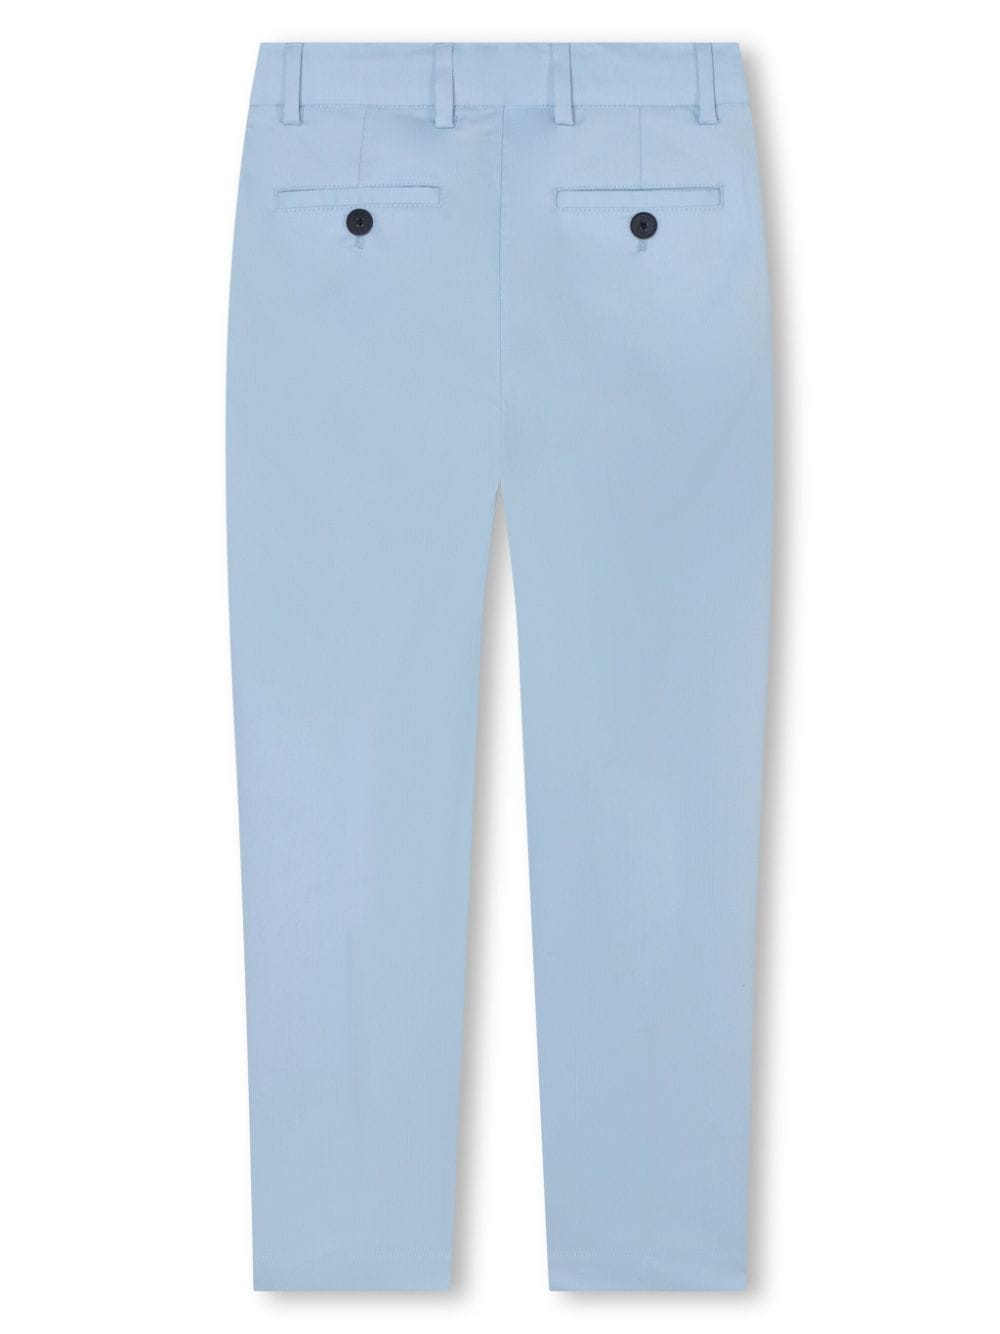 Pantaloni bambino blu chiaro